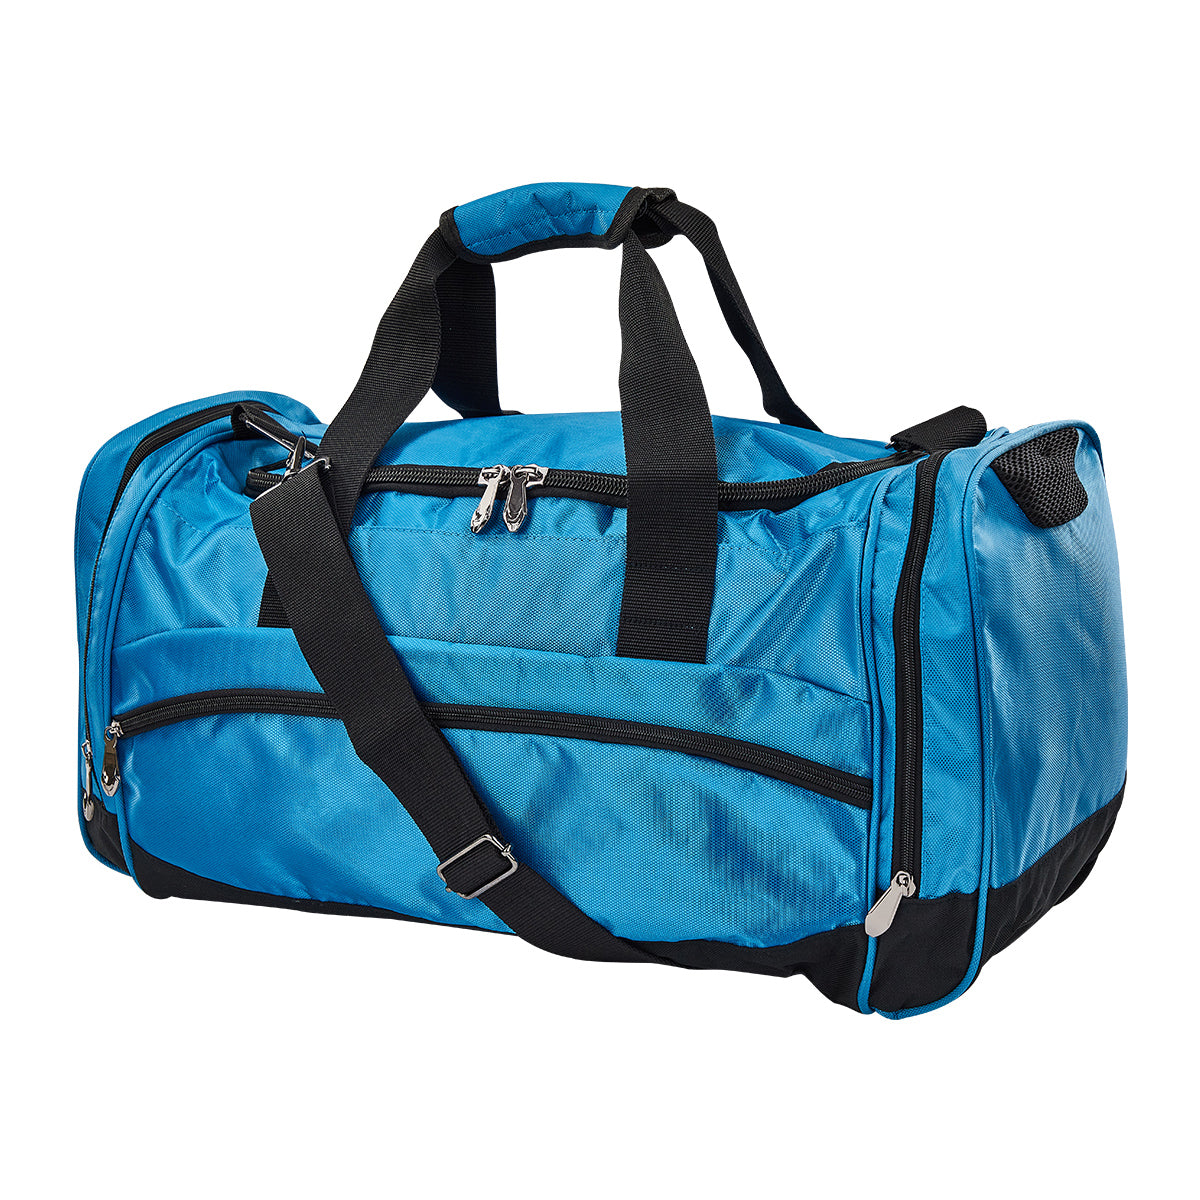 Premium Sport Bag - Large Large Blue